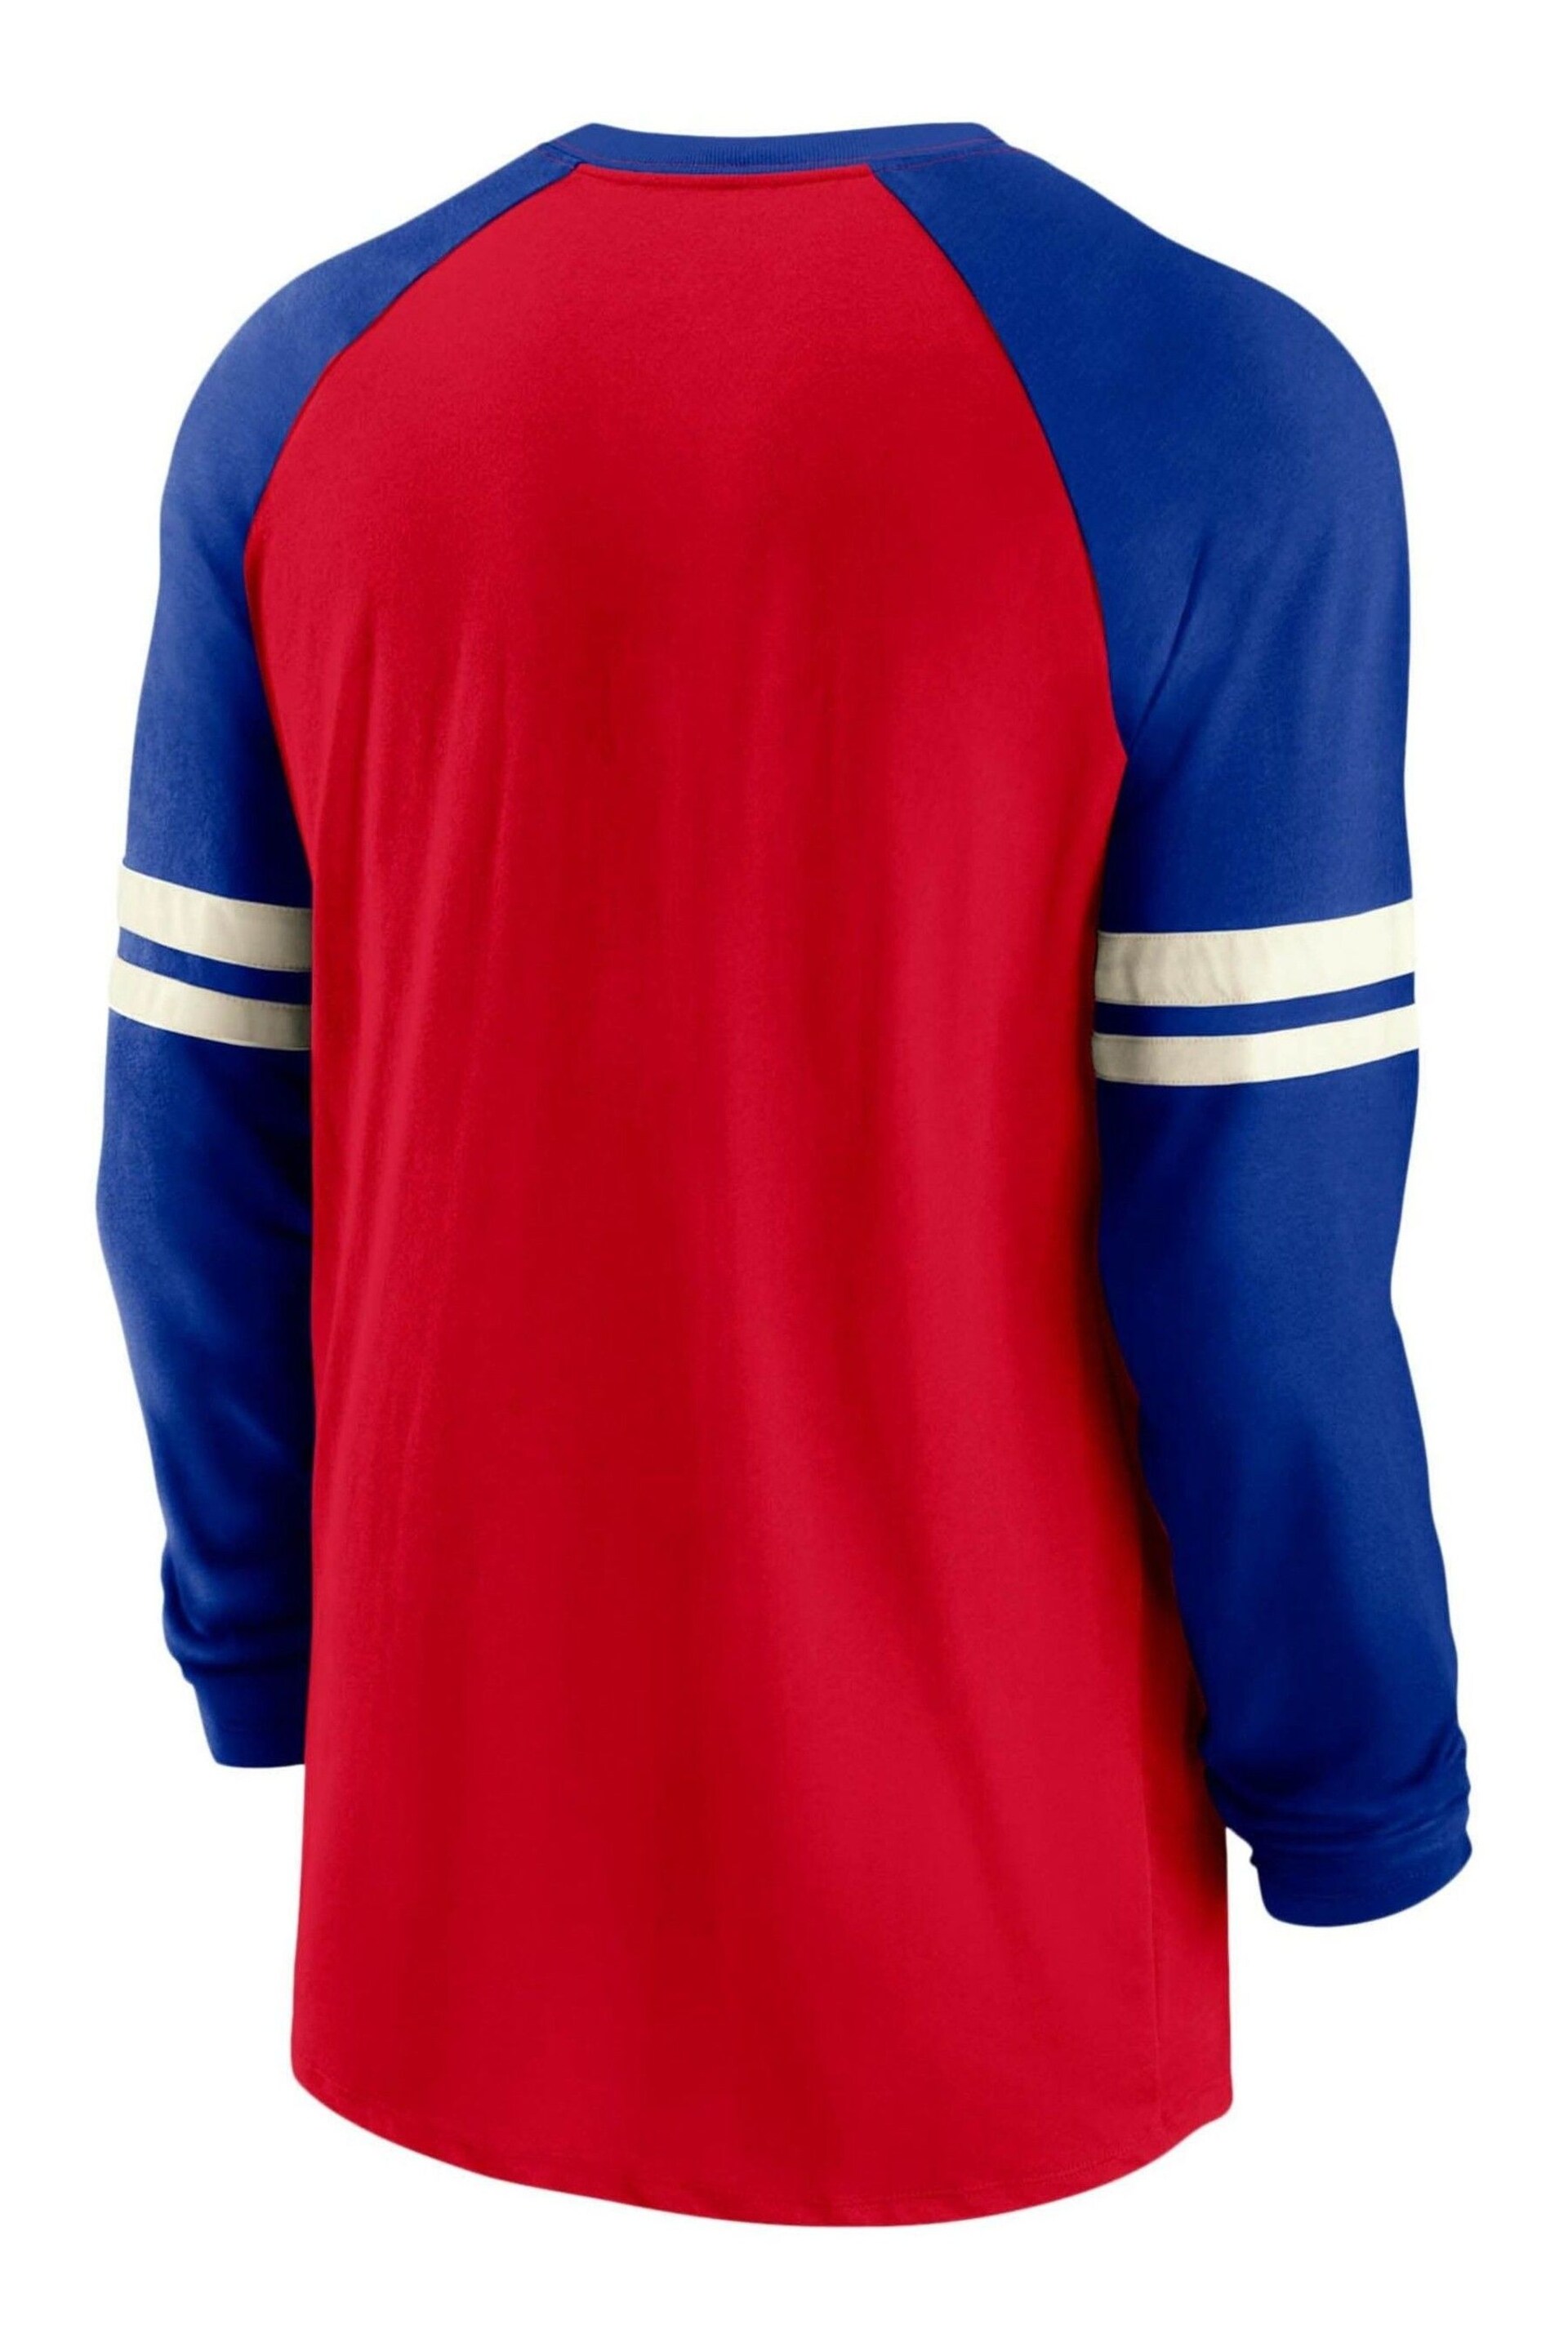 Nike Red NFL Fanatics New England Patriots Dri-FIT Cotton Long Sleeve Raglan T-Shirt - Image 3 of 3